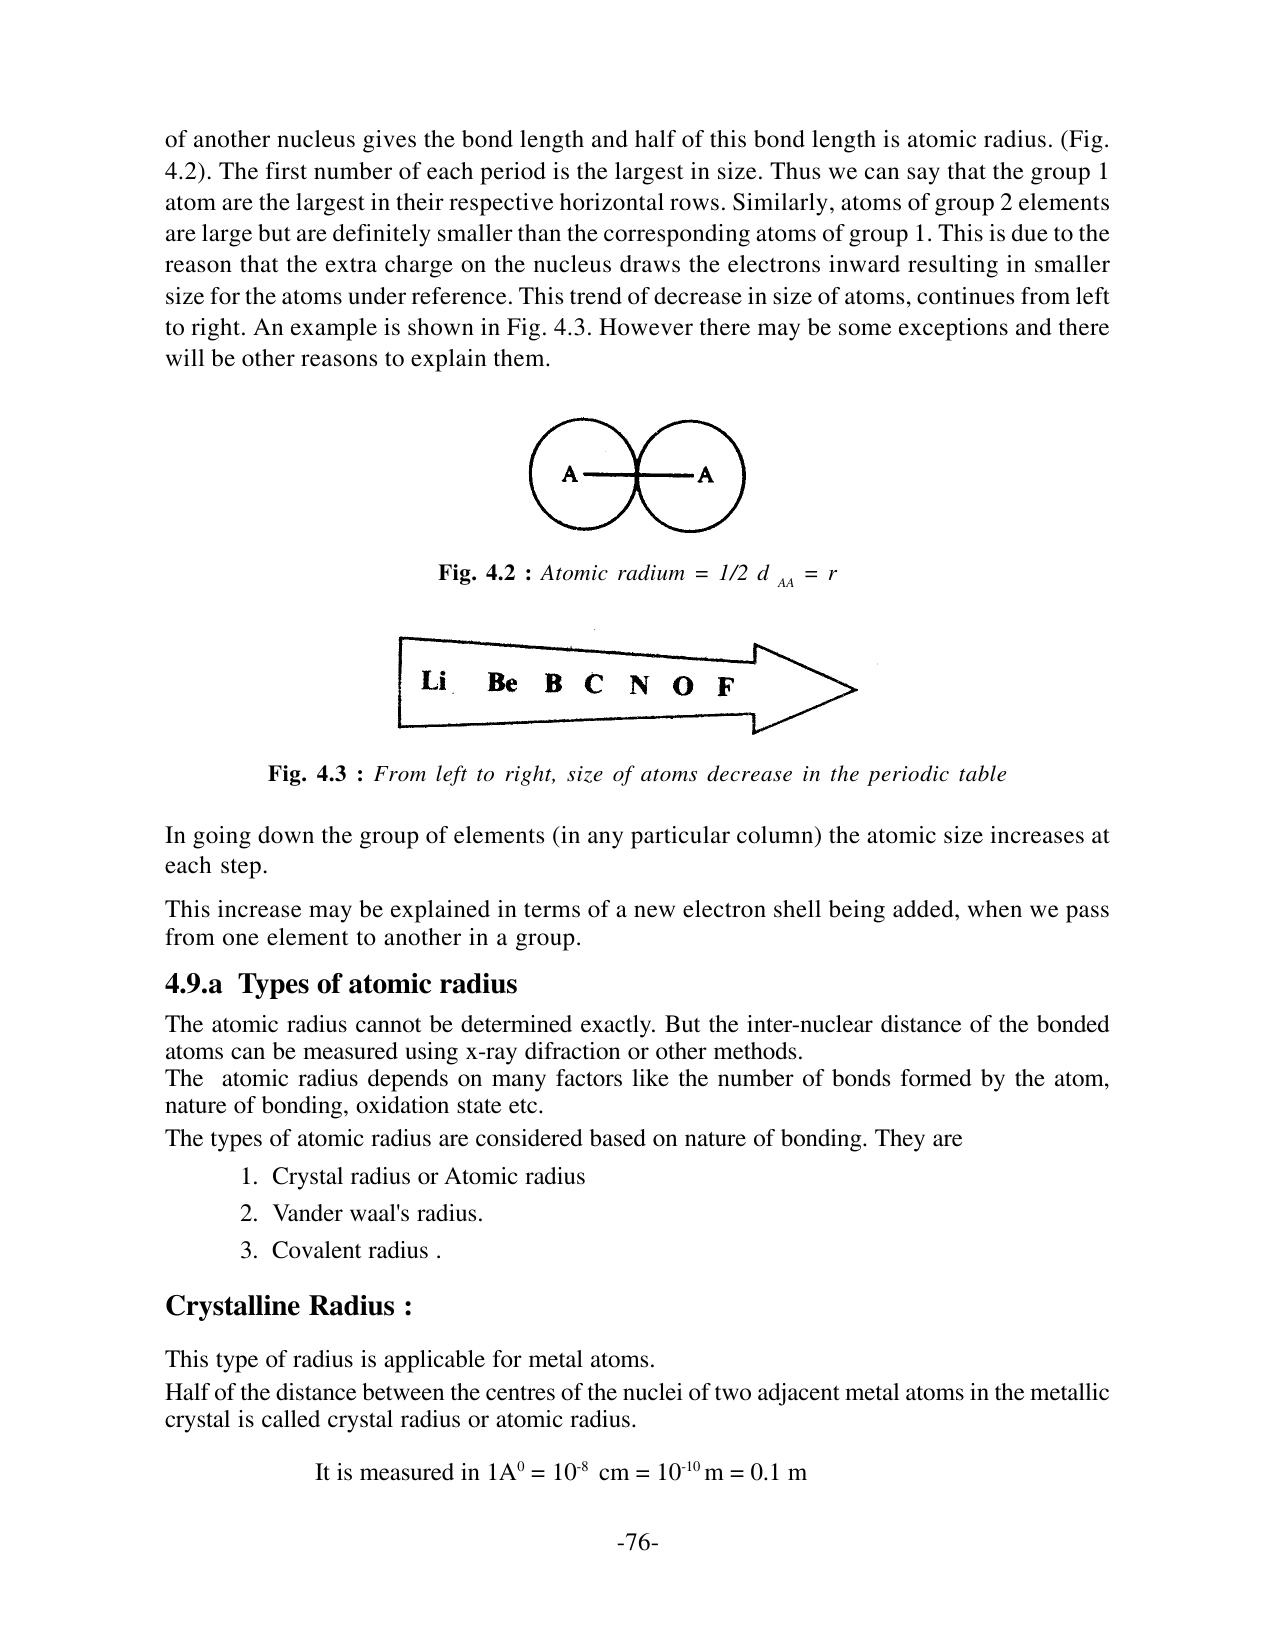 TS SCERT Inter 1st Year Chemistry Vol – I Path 1 (English Medium) Text Book - Page 85